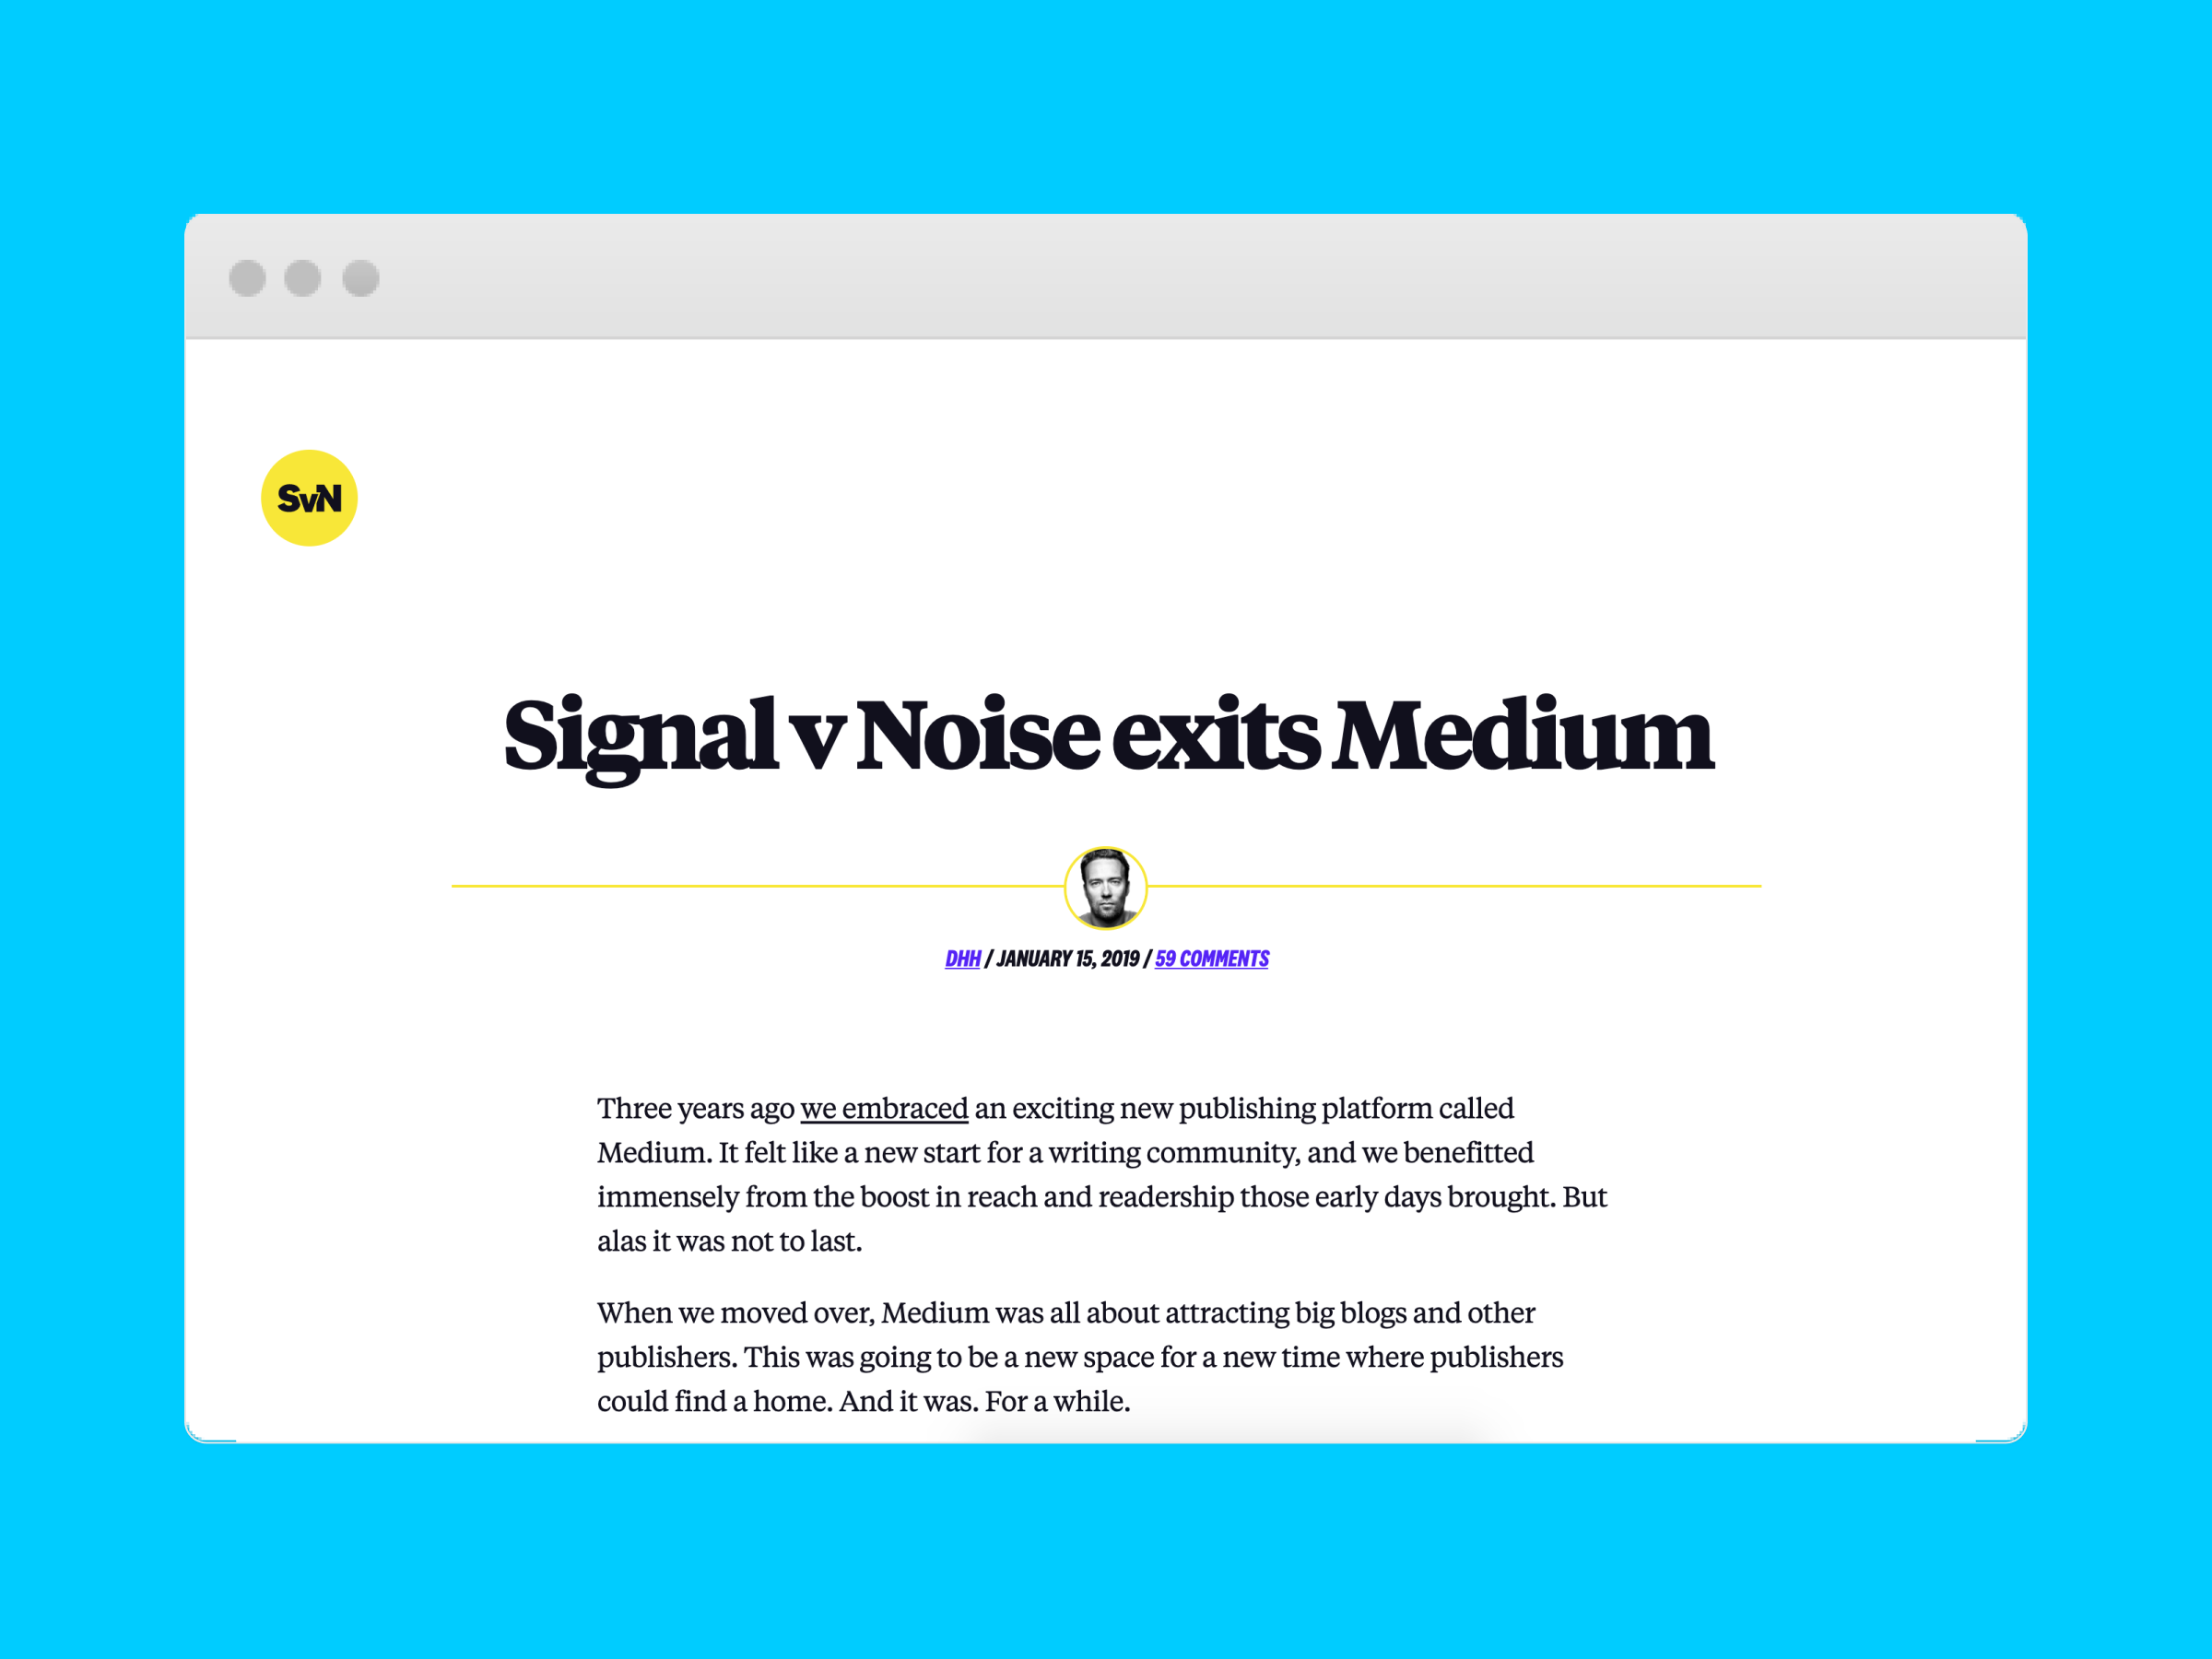 Article on why Signal v Noise has left Medium